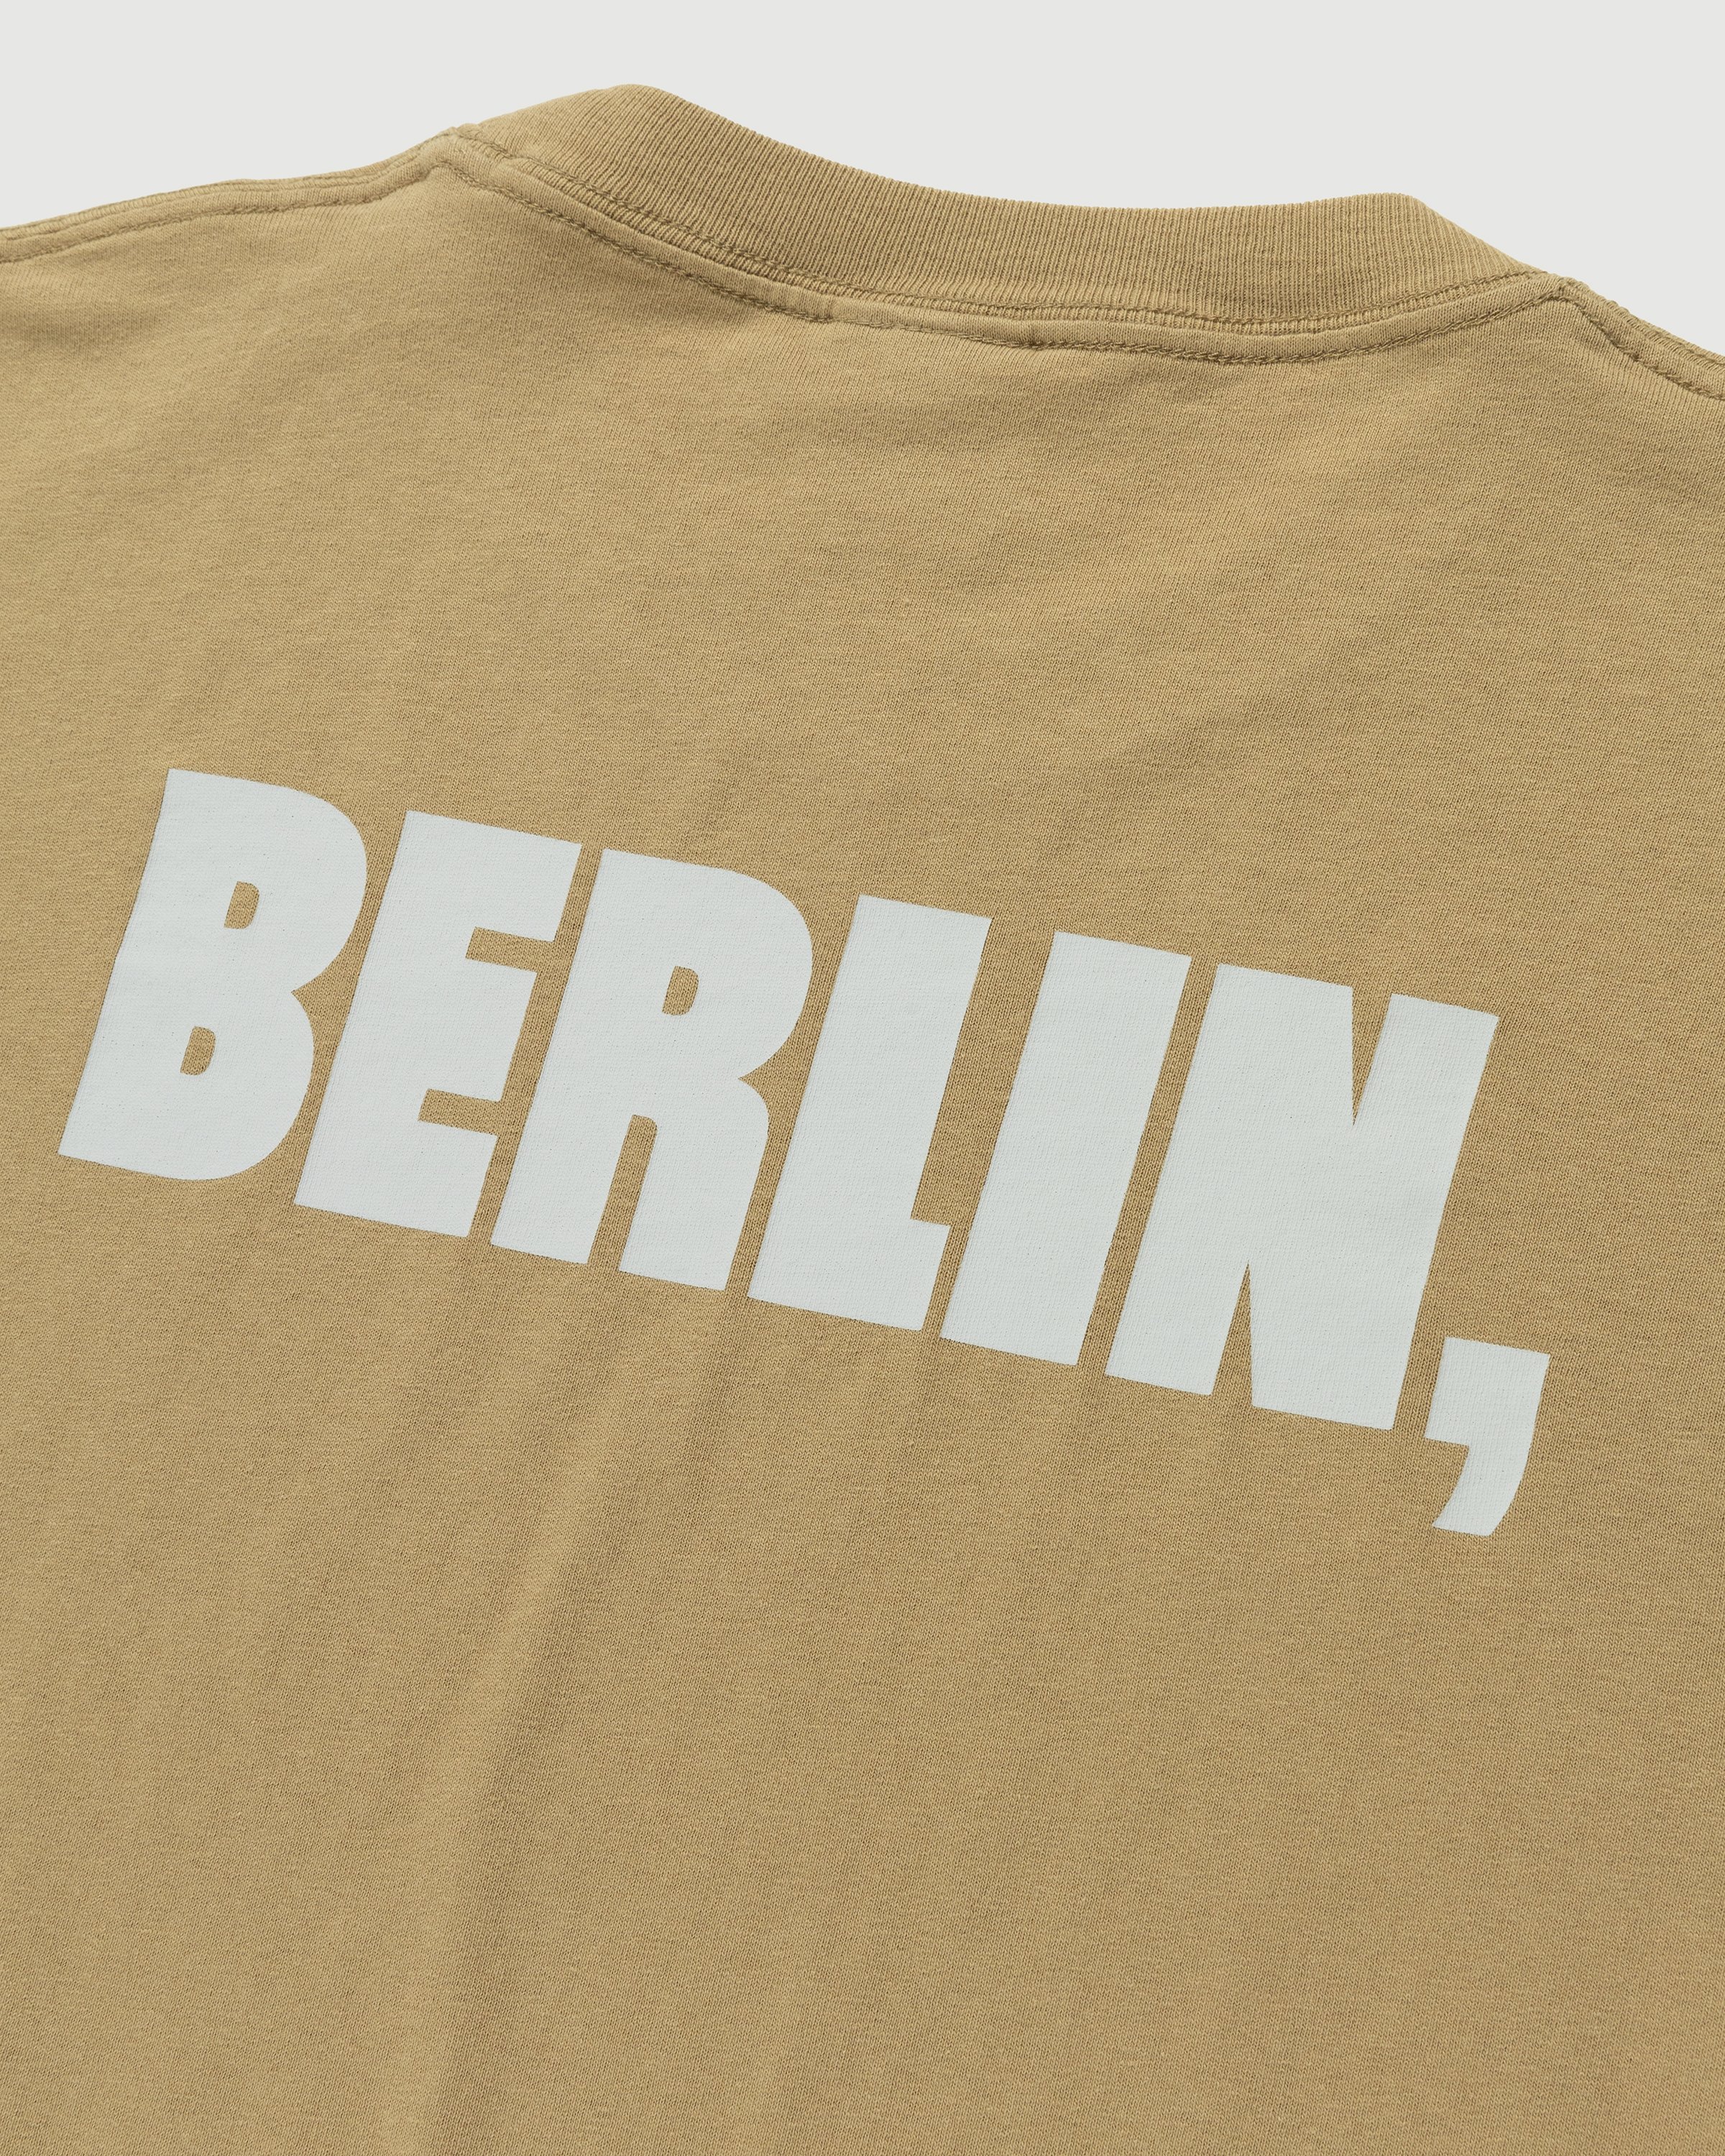 Highsnobiety - BERLIN, BERLIN 3 T-Shirt Military Green - Clothing - Beige - Image 5